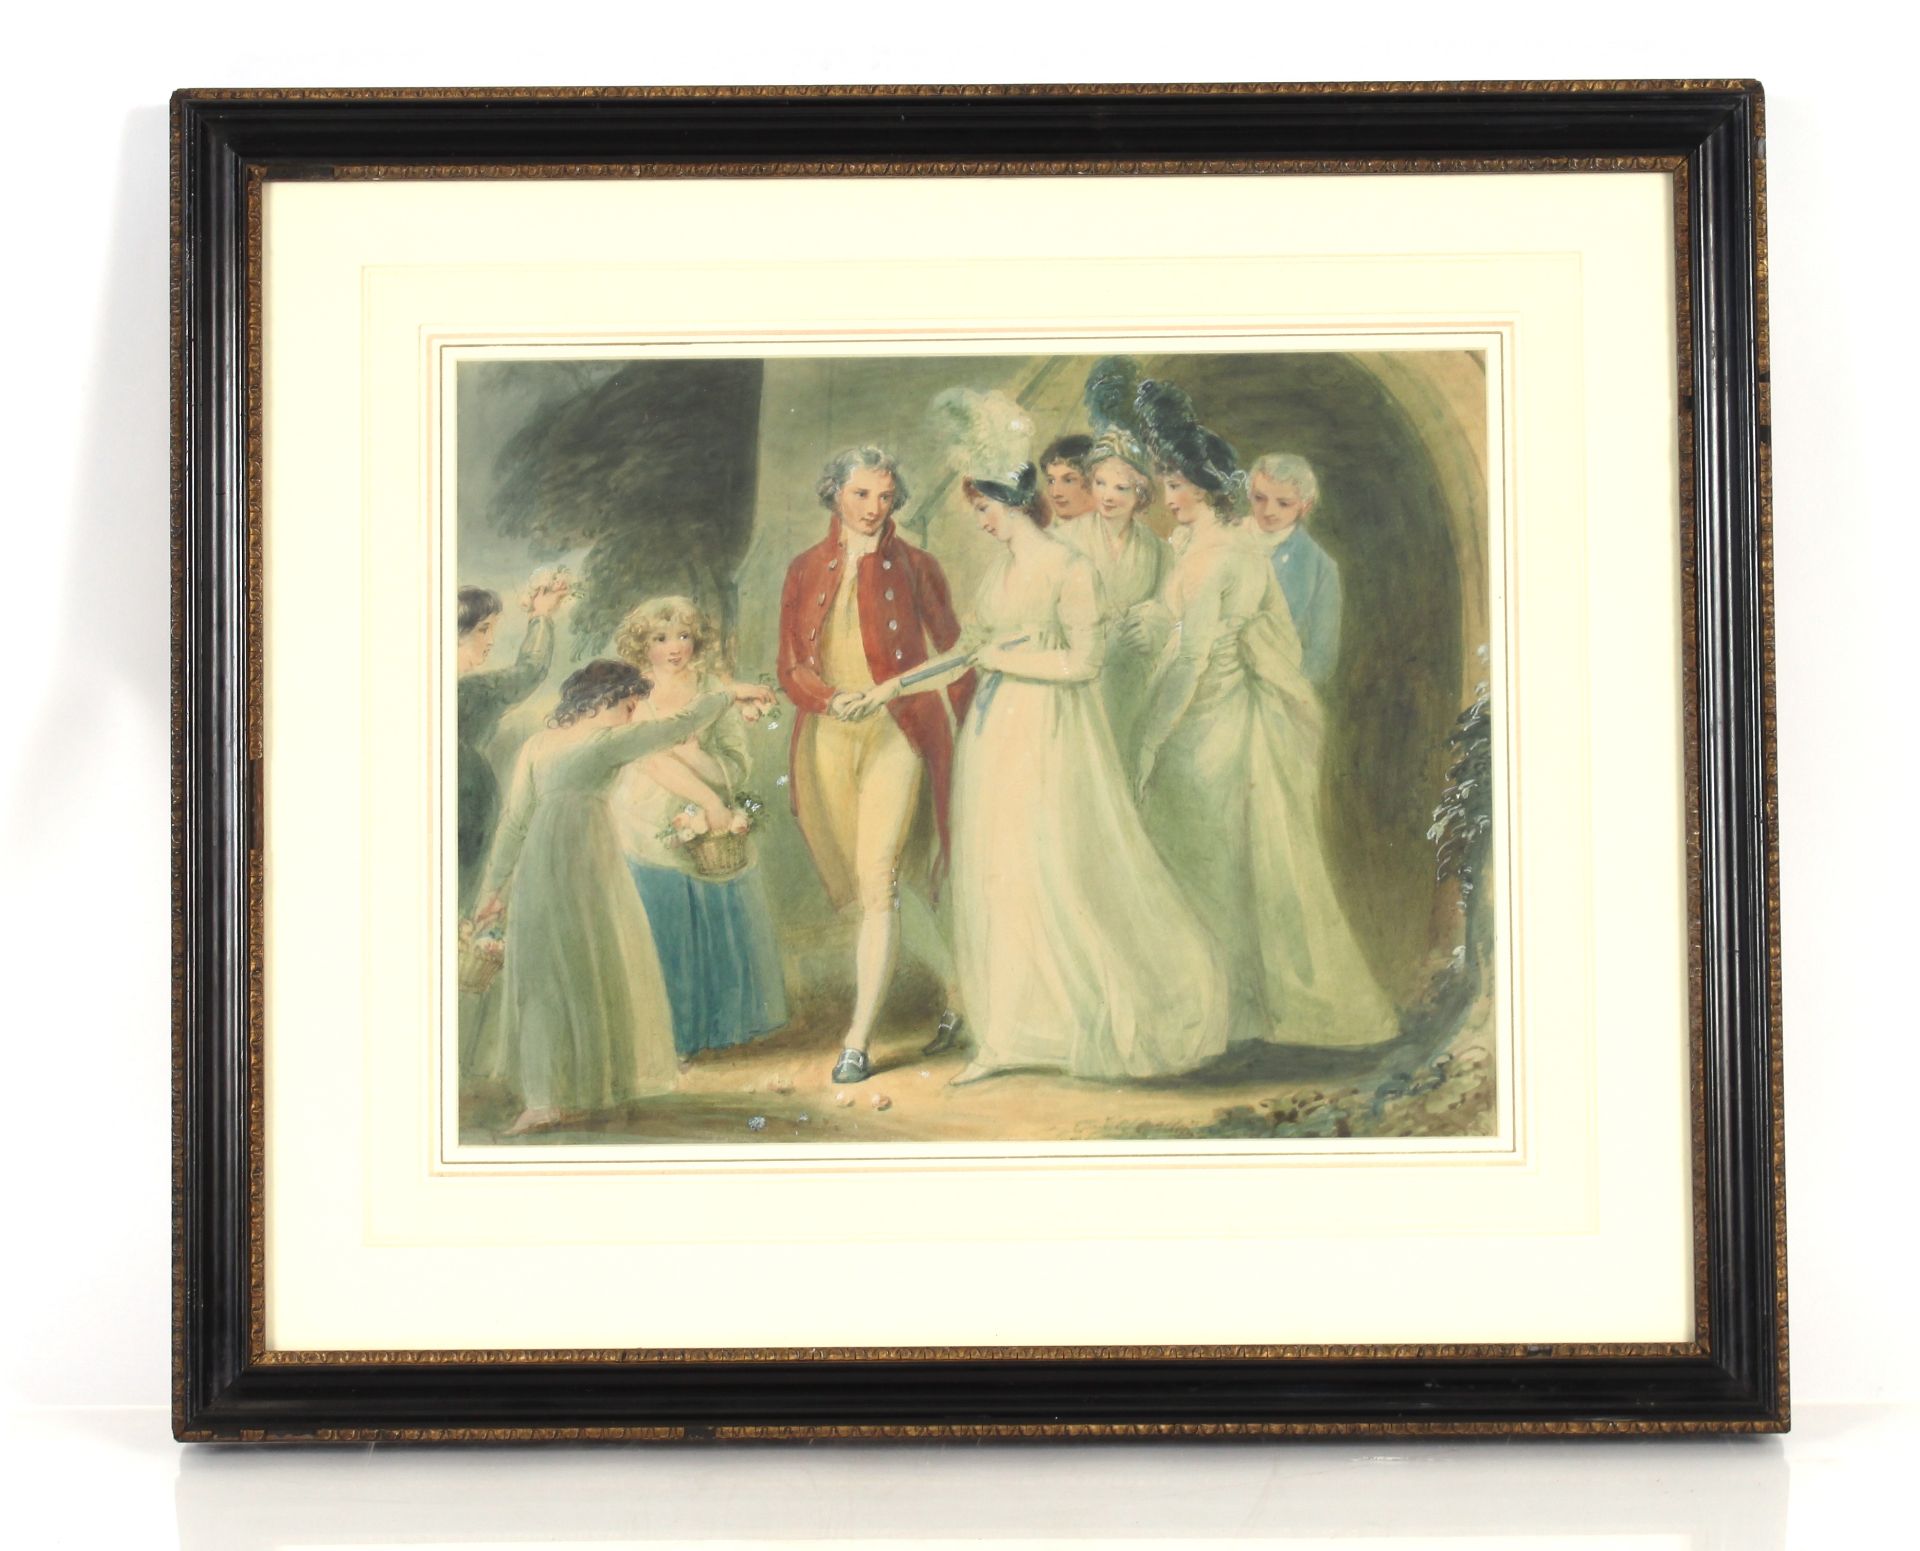 Thomas Stothard 1755-1834, "Wedding Procession" watercolour label verso, 29cm x 38cm - Image 2 of 2